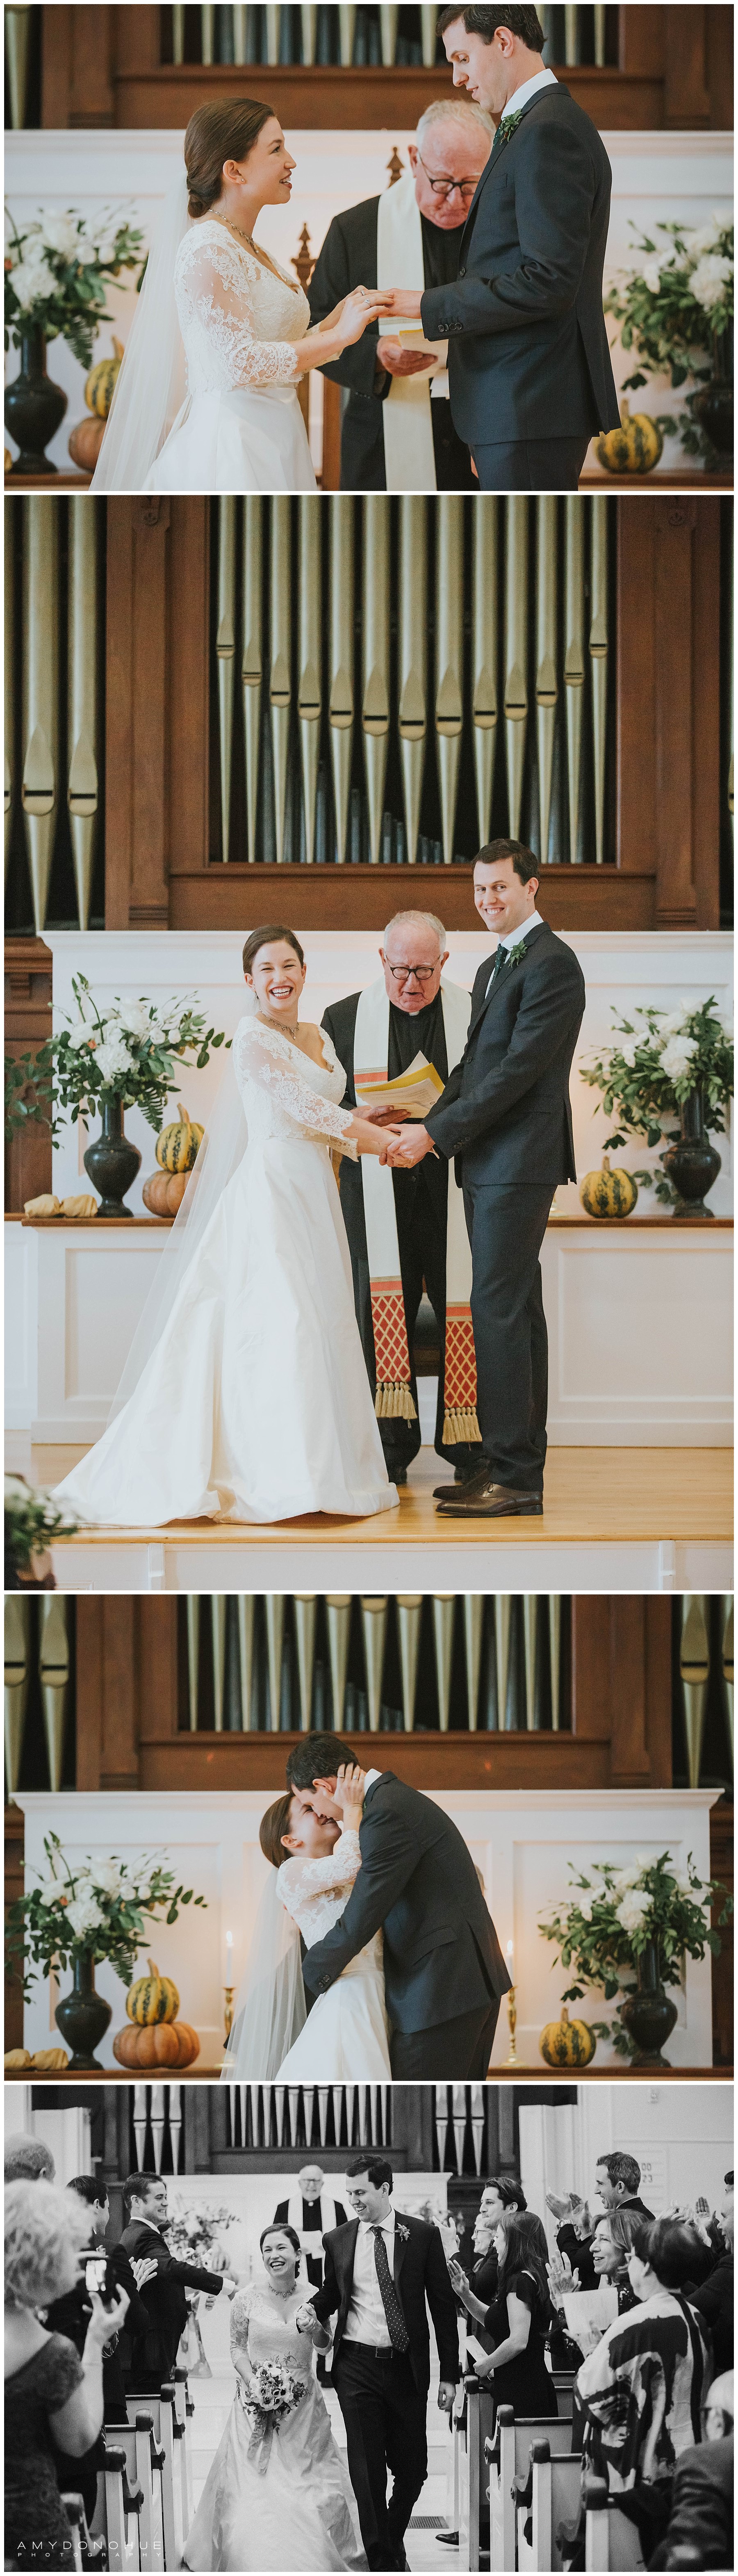 North Chapel Wedding Ceremony | Woodstock, Vermont Wedding Photographer | © Amy Donohue Photography